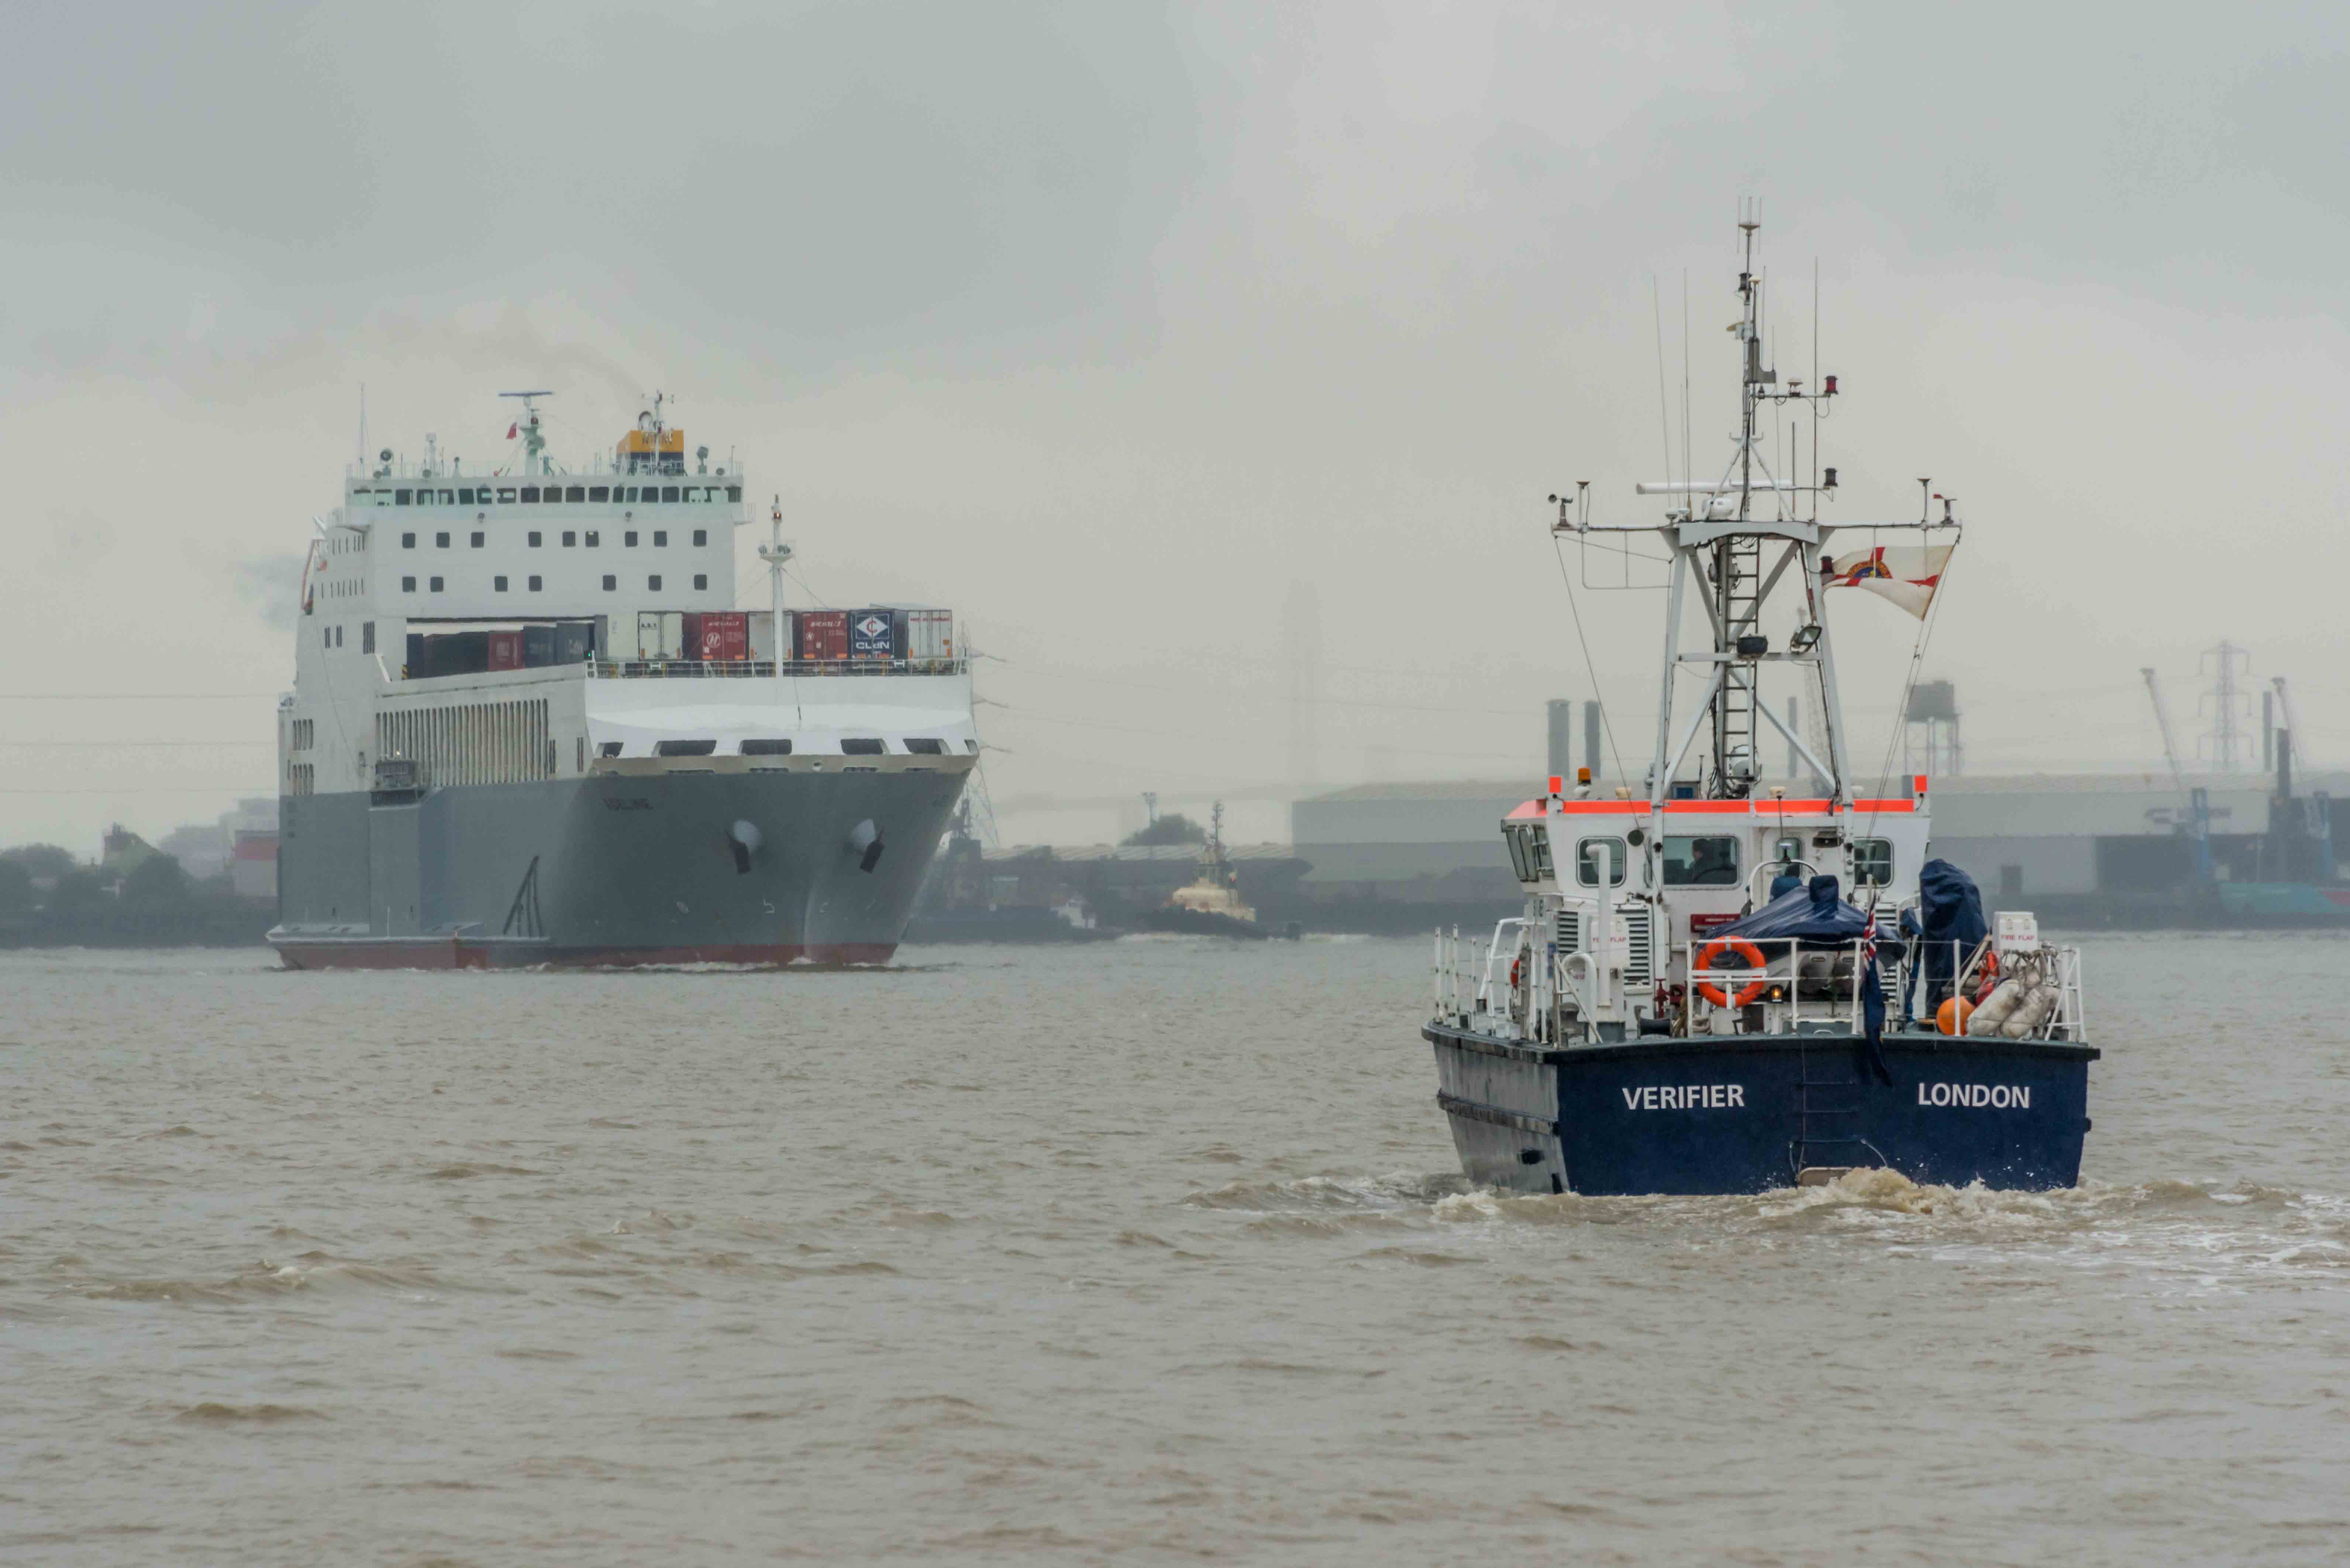 Photograph of two ships, one is PLA survey vessel VERIFIER